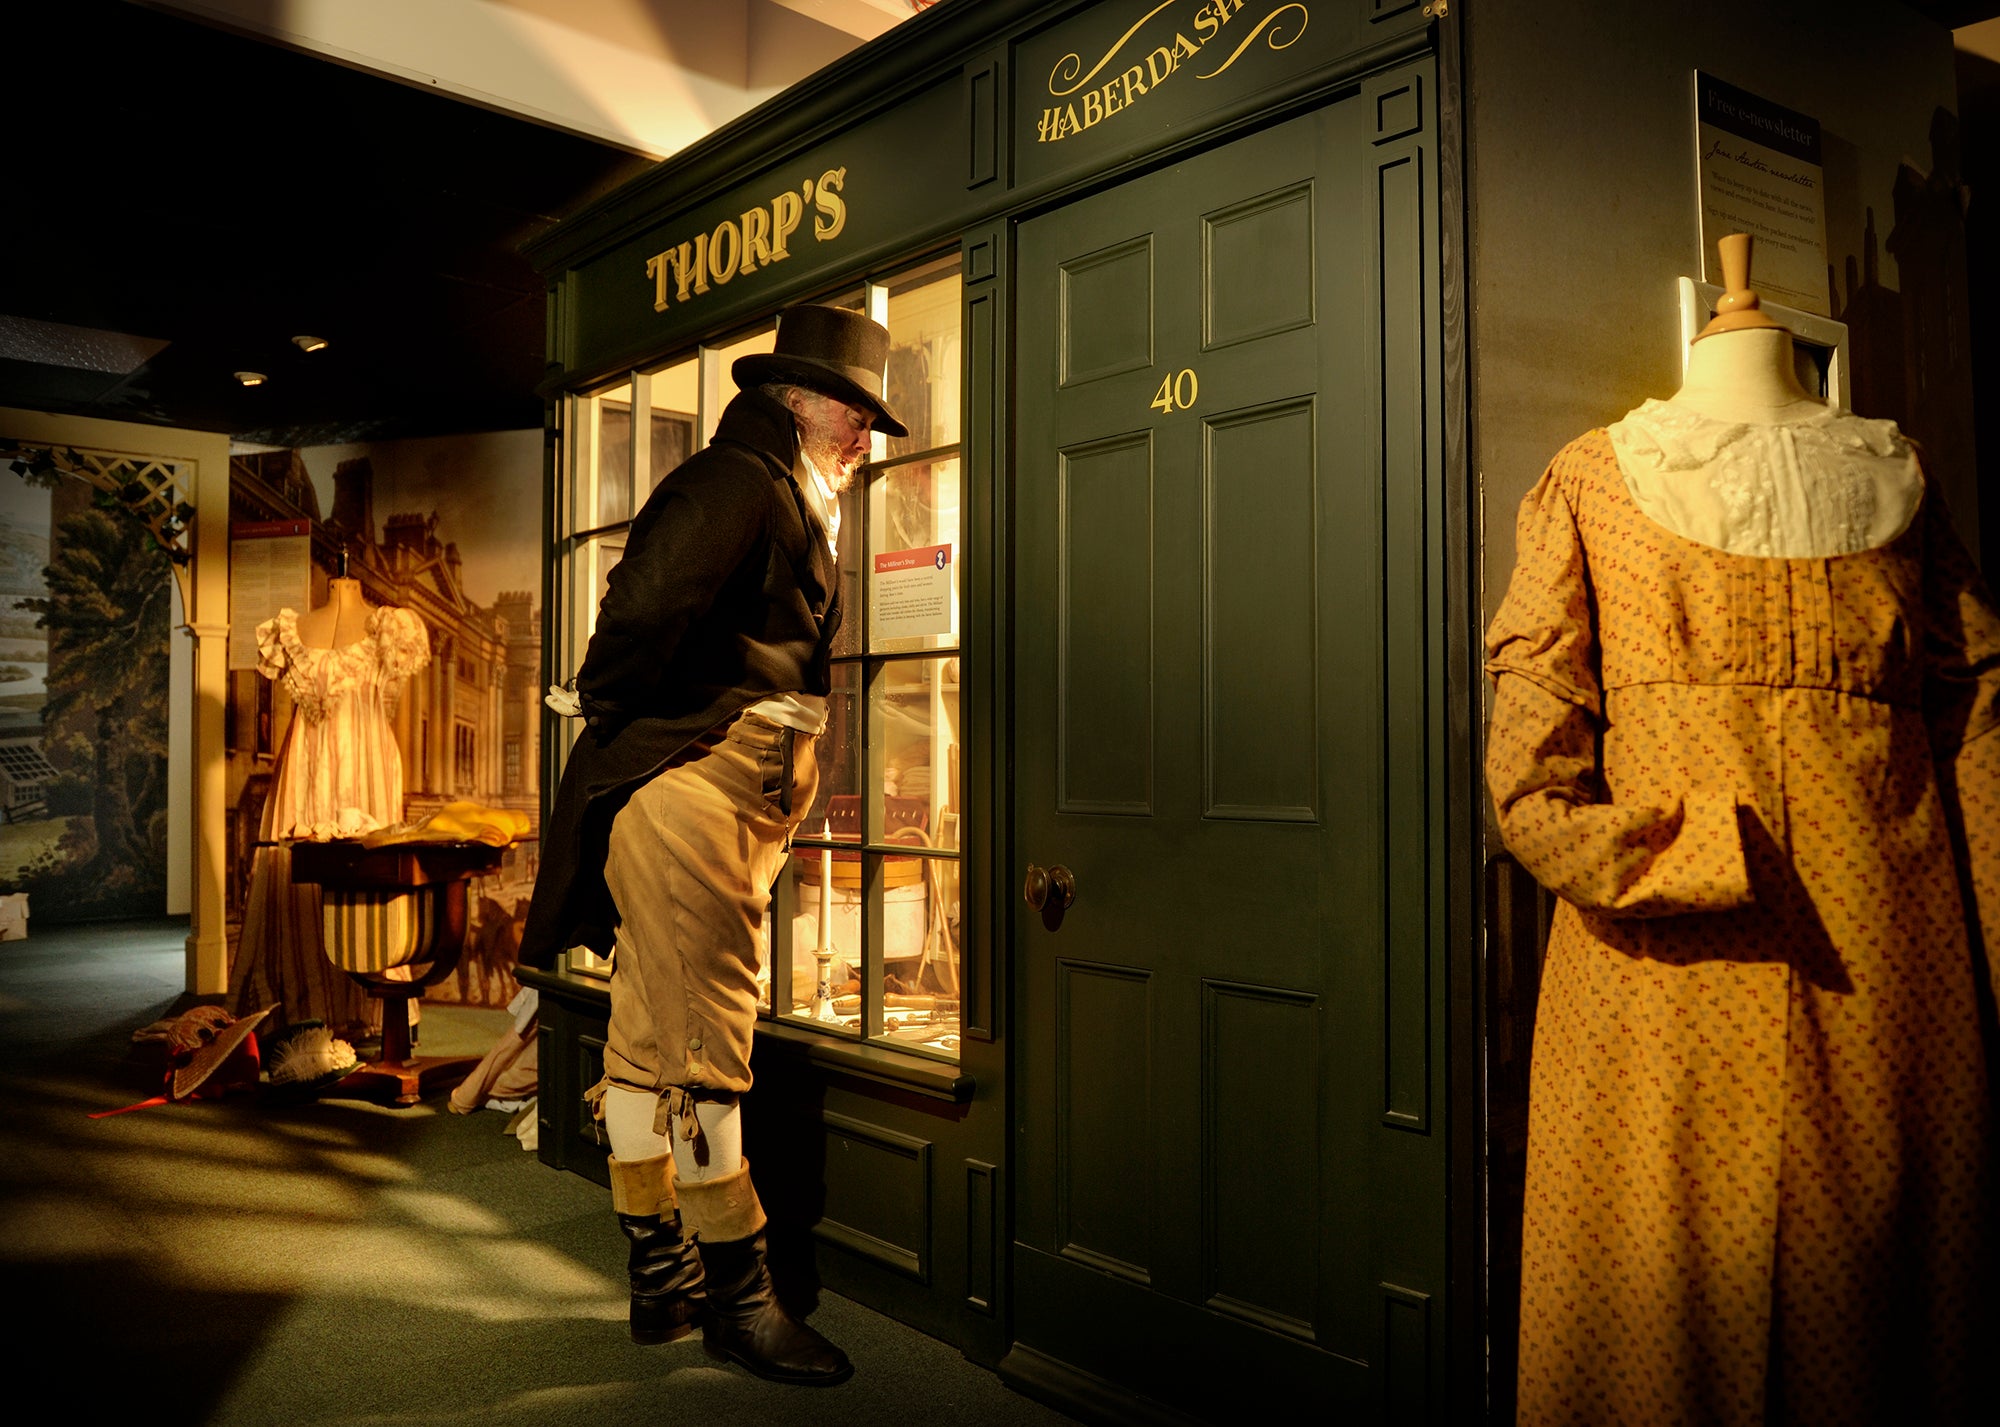 The Exhibition at the Jane Austen Centre